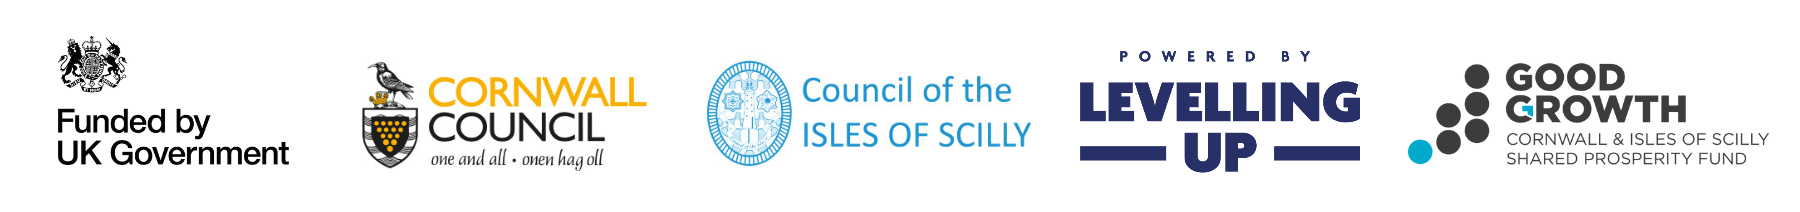 Cornwall Council Good Growth Fund SPF Logos